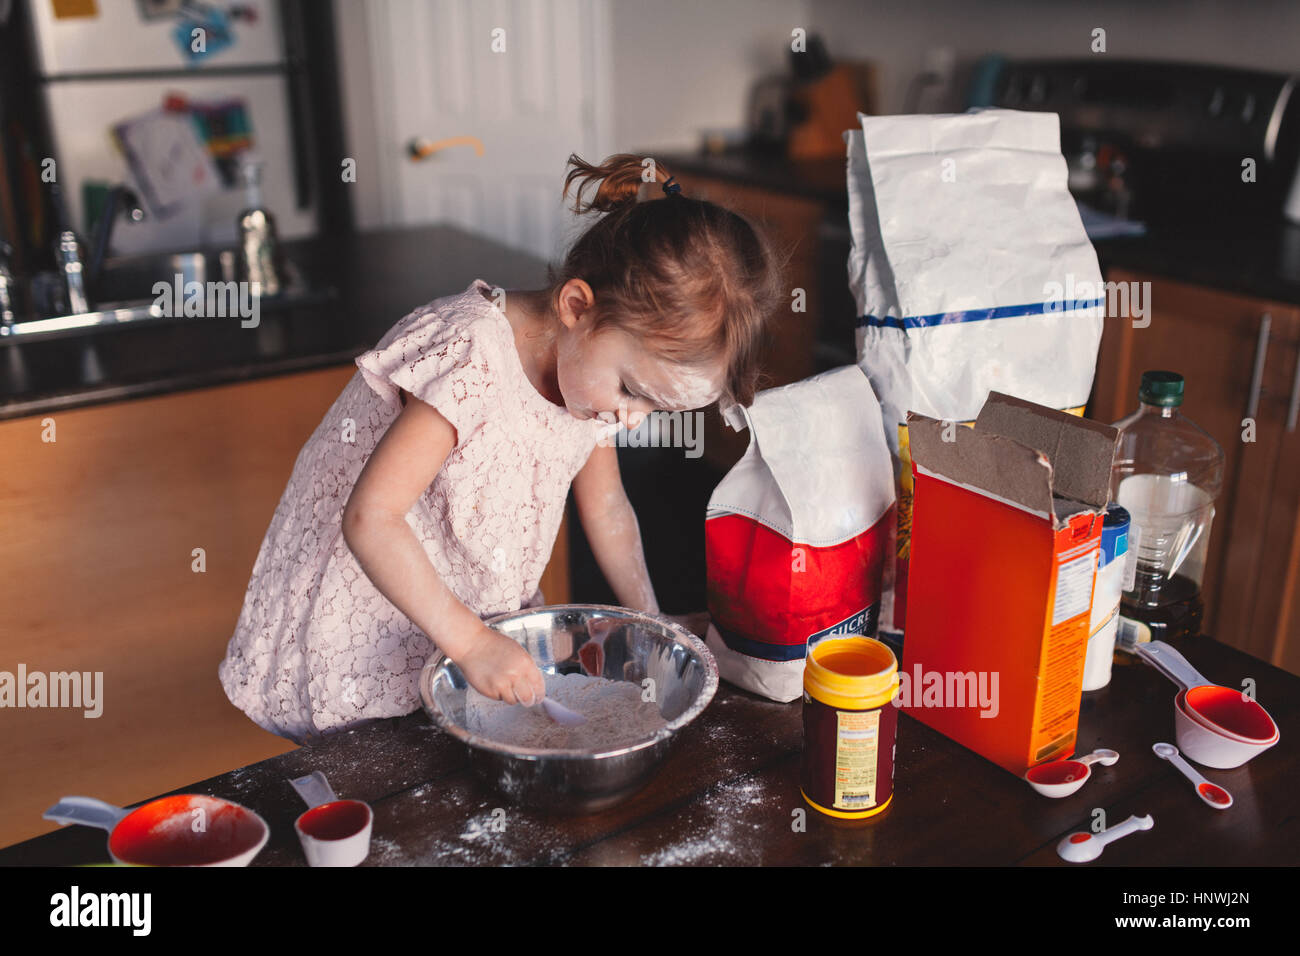 Messy girl in kitchen stirring bowl of flour Stock Photo